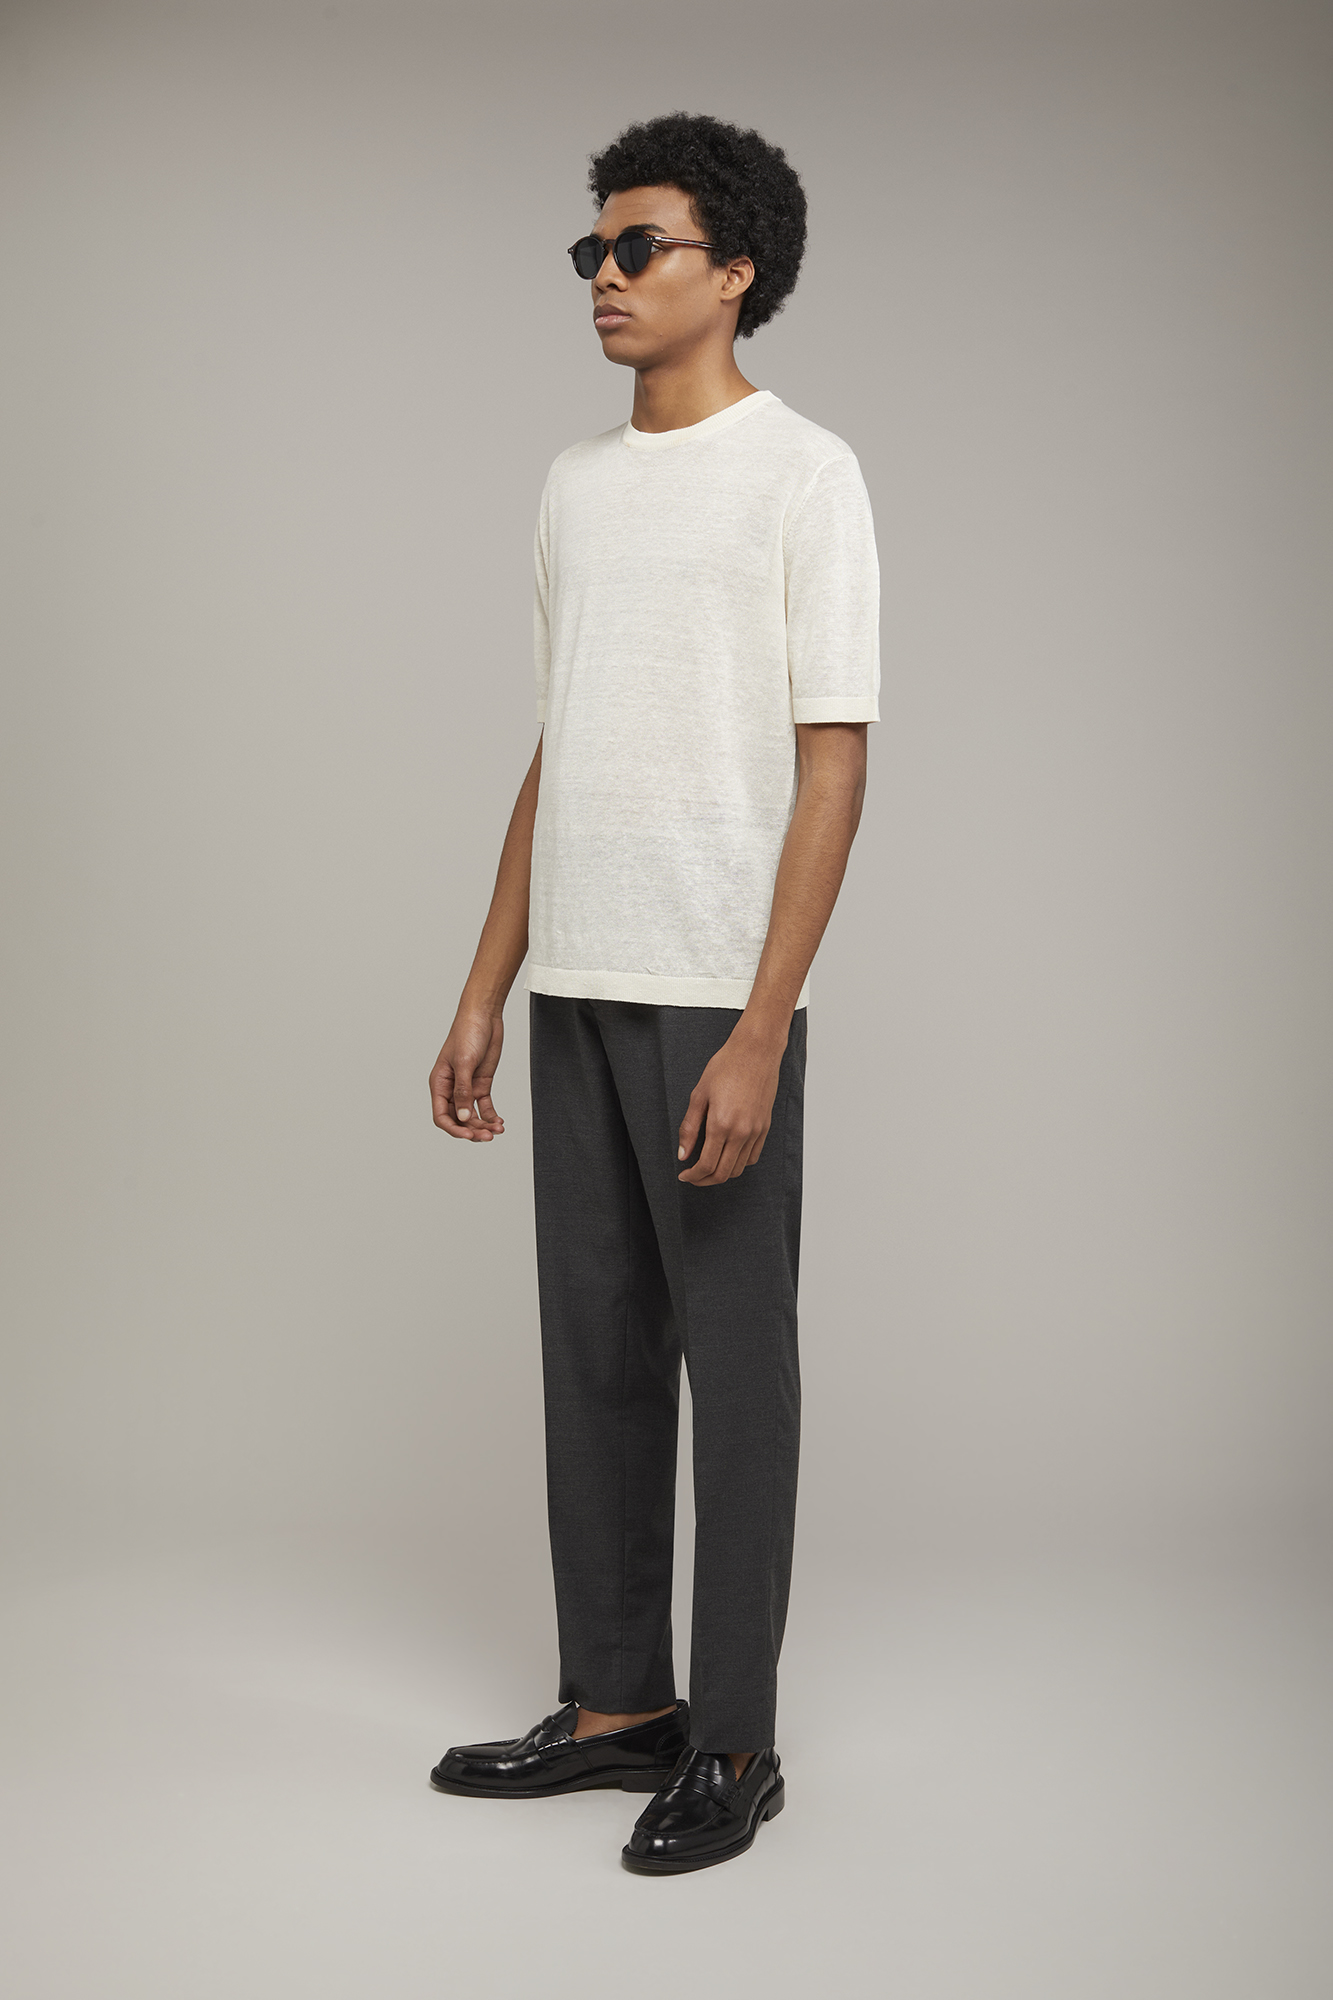 Men's knitted t-shirt 100% linen short-sleeved regular fit image number null